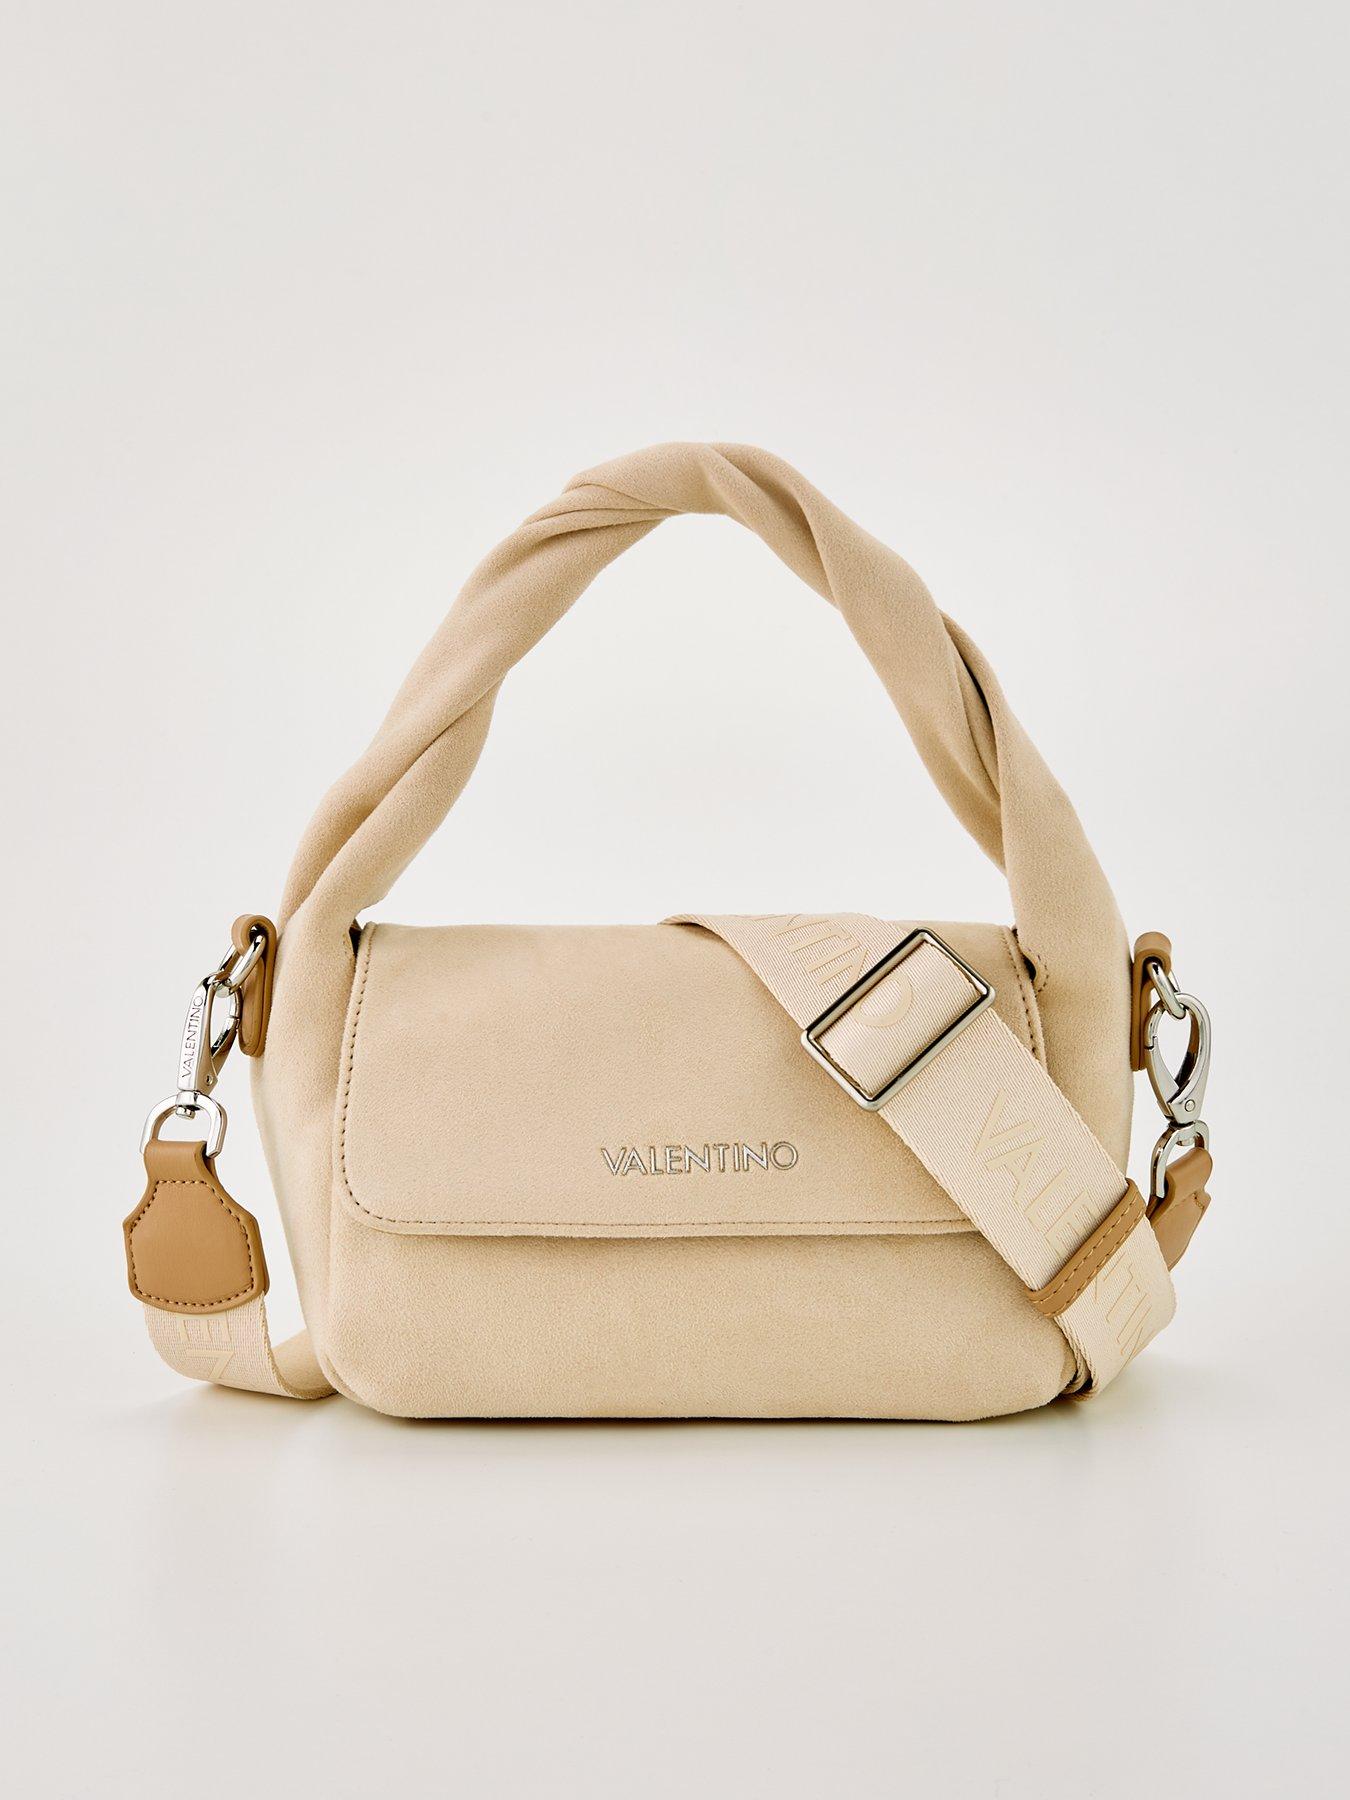 Valentino by Mario Valentino Quilted Velvet Shoulder Bag in Burgandy